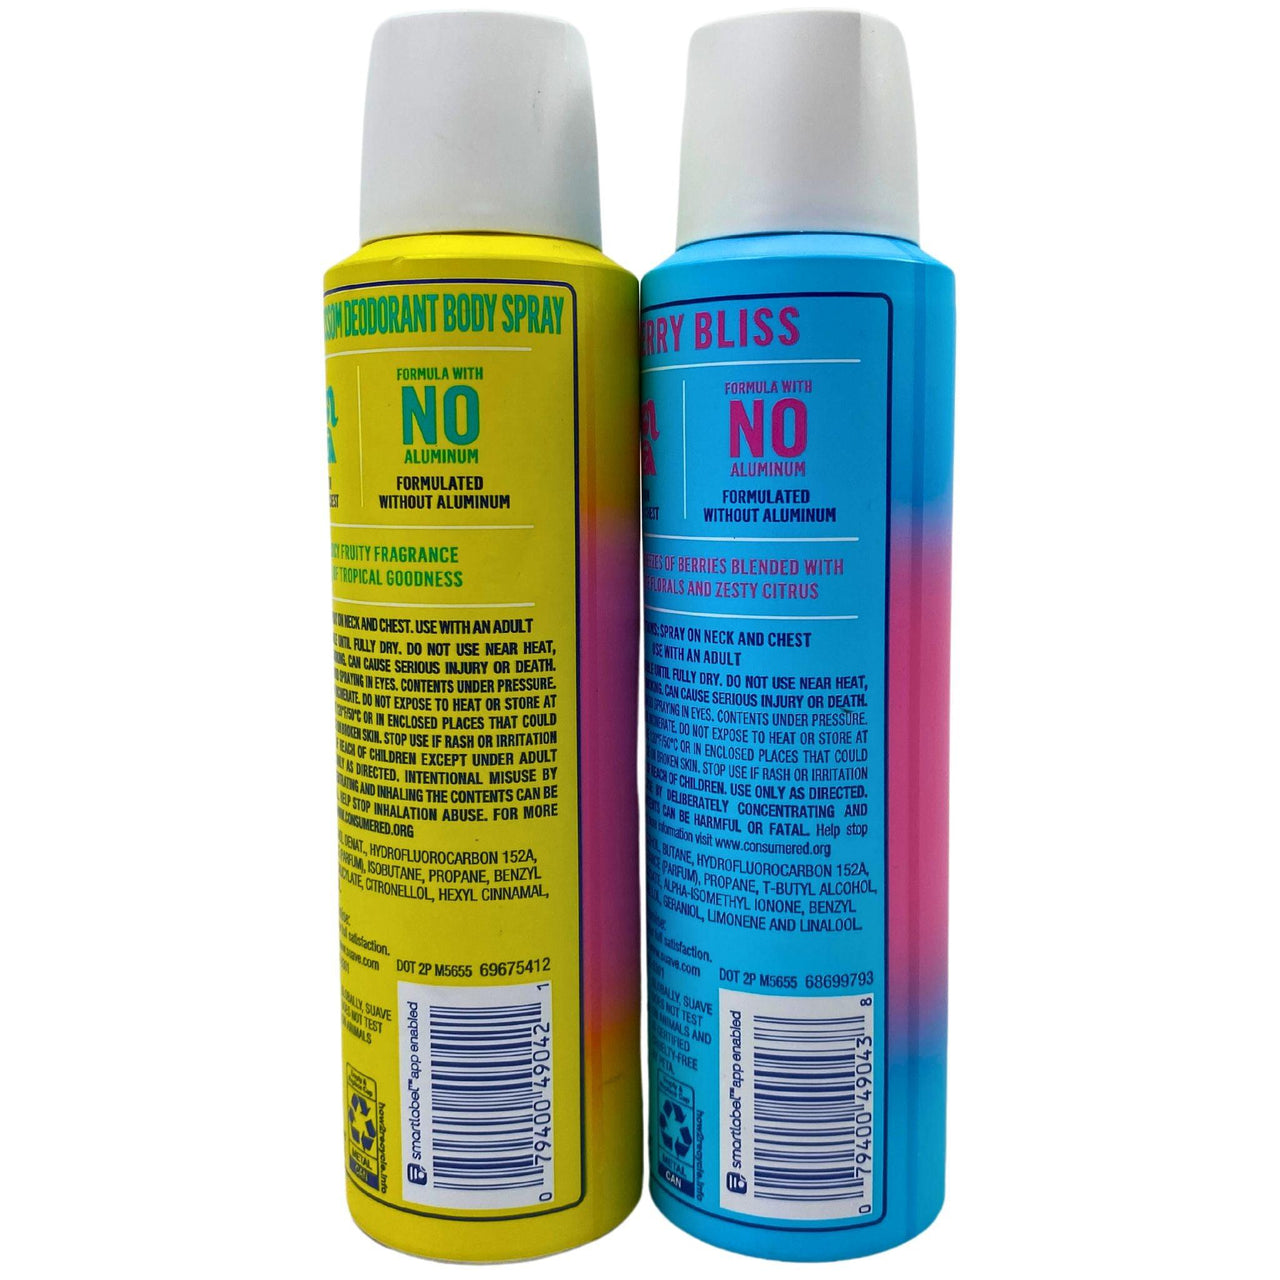 Suave Fresh Vibes Mix Deodorant Body Spray 48-Hour 4OZ (30 Pcs lot) - Discount Wholesalers Inc